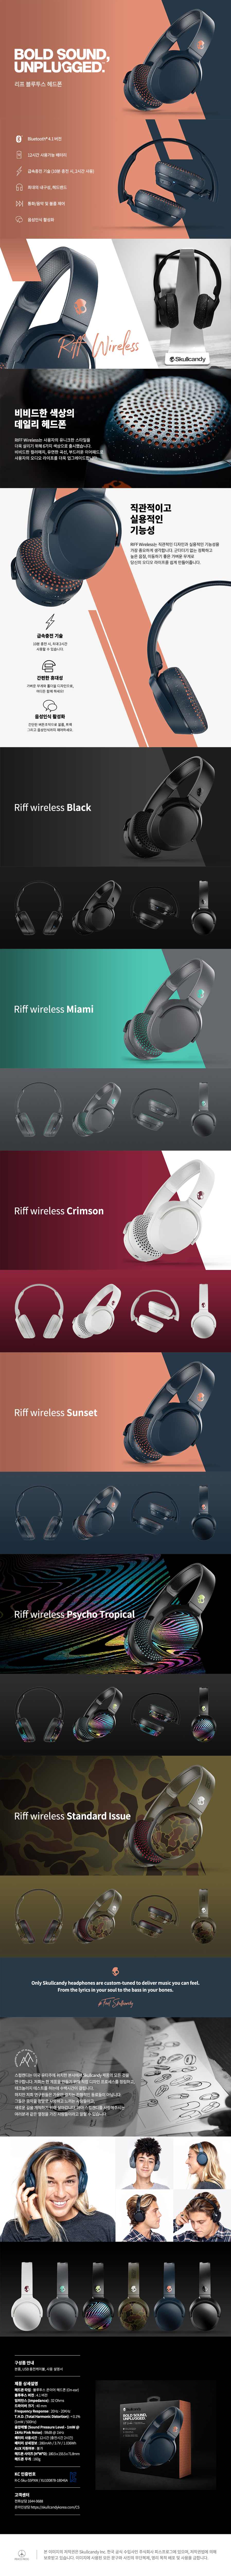 RIFF+Wireless+상세페이지.jpg